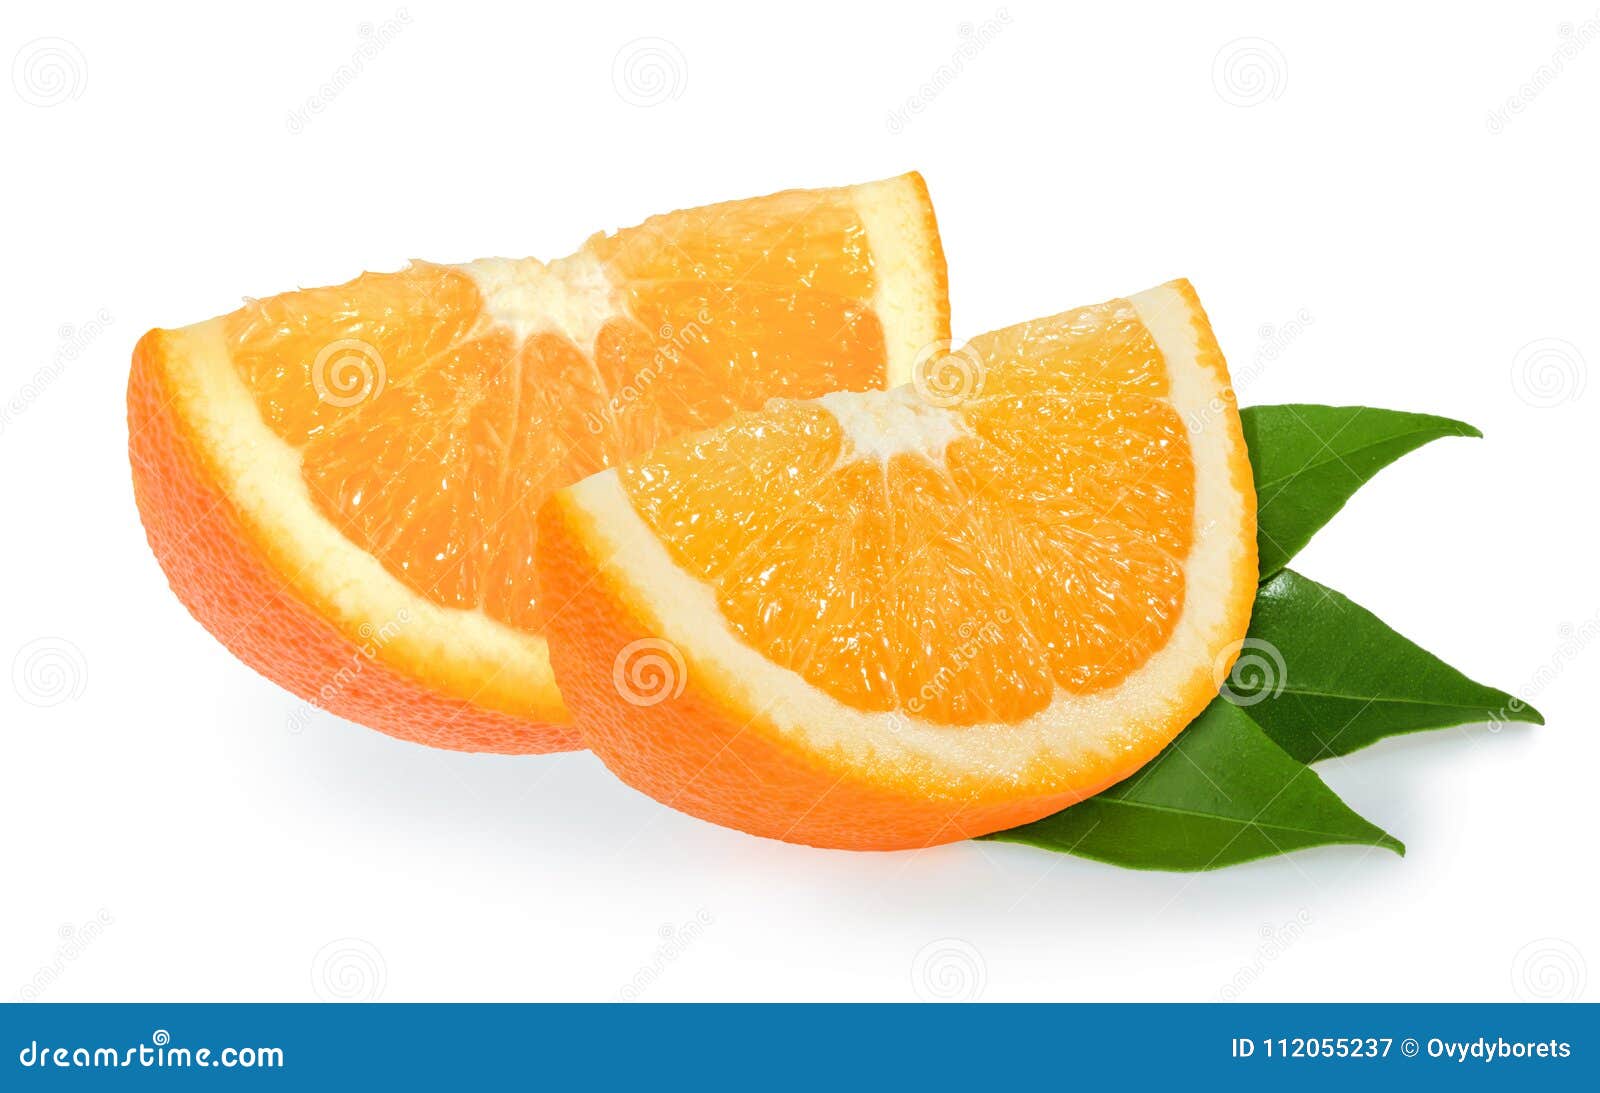 orange slices  on white